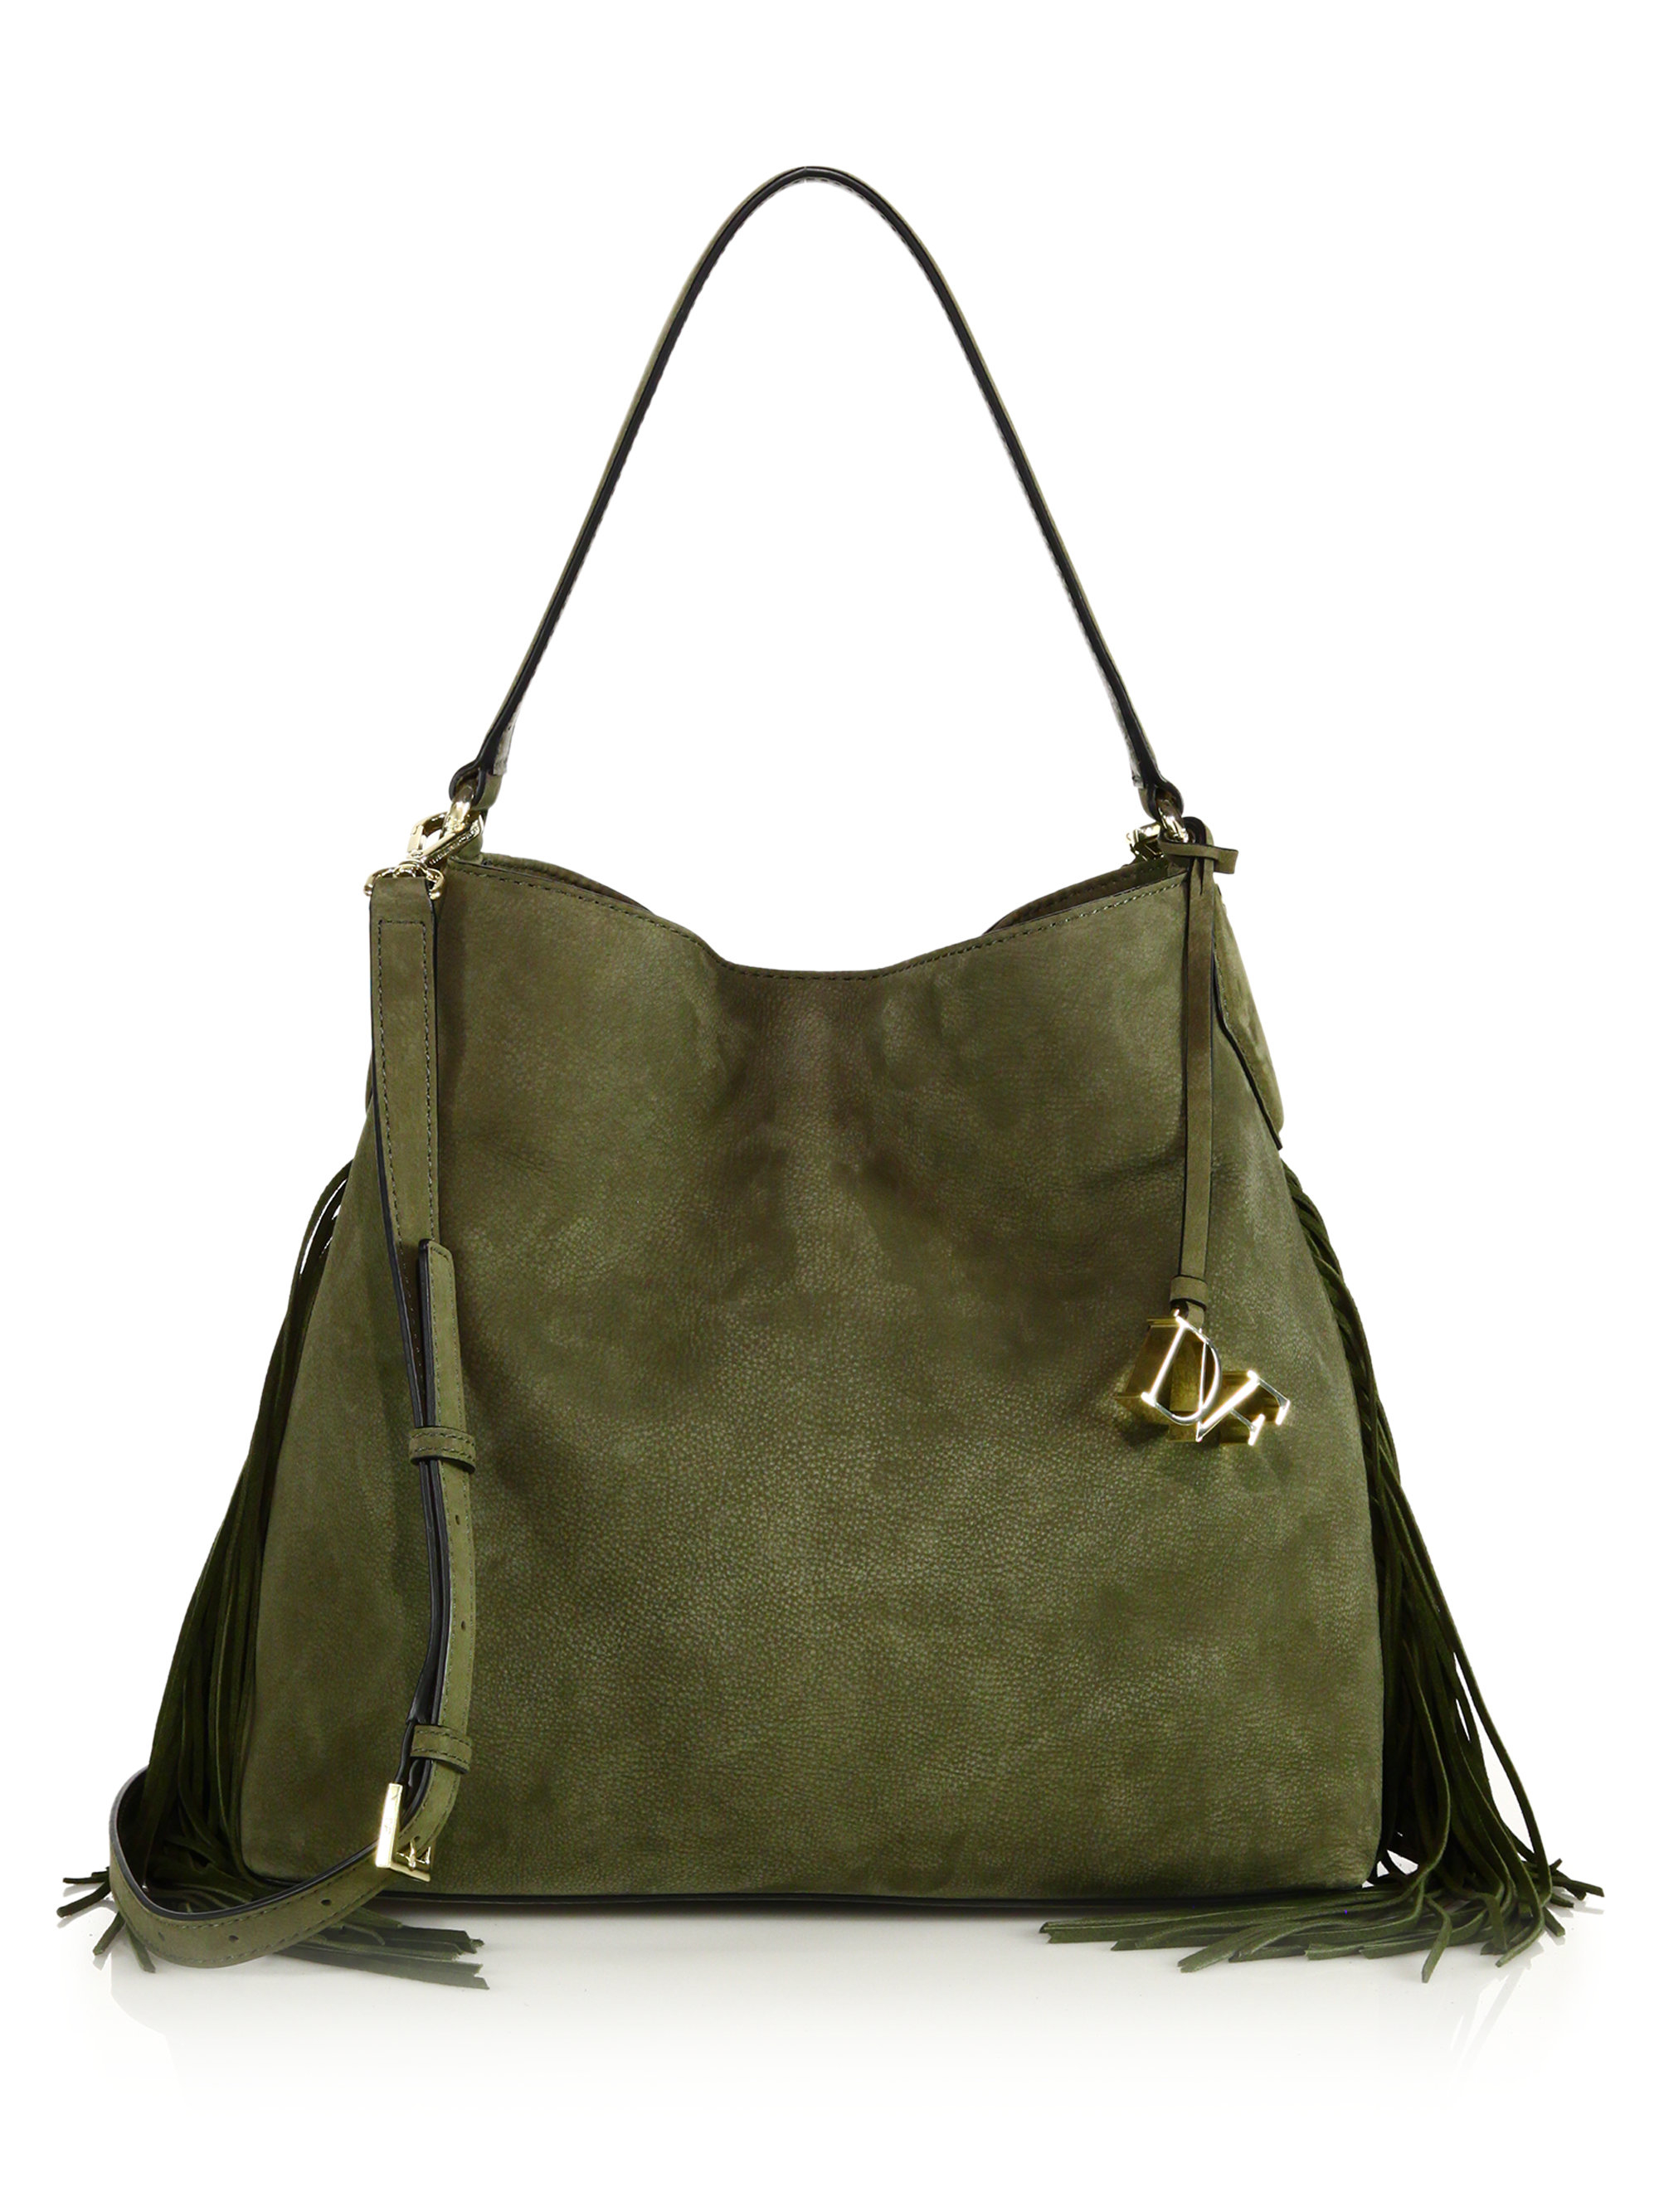 Dior Handbags At Neiman Marcus: Suede Handbags For Women